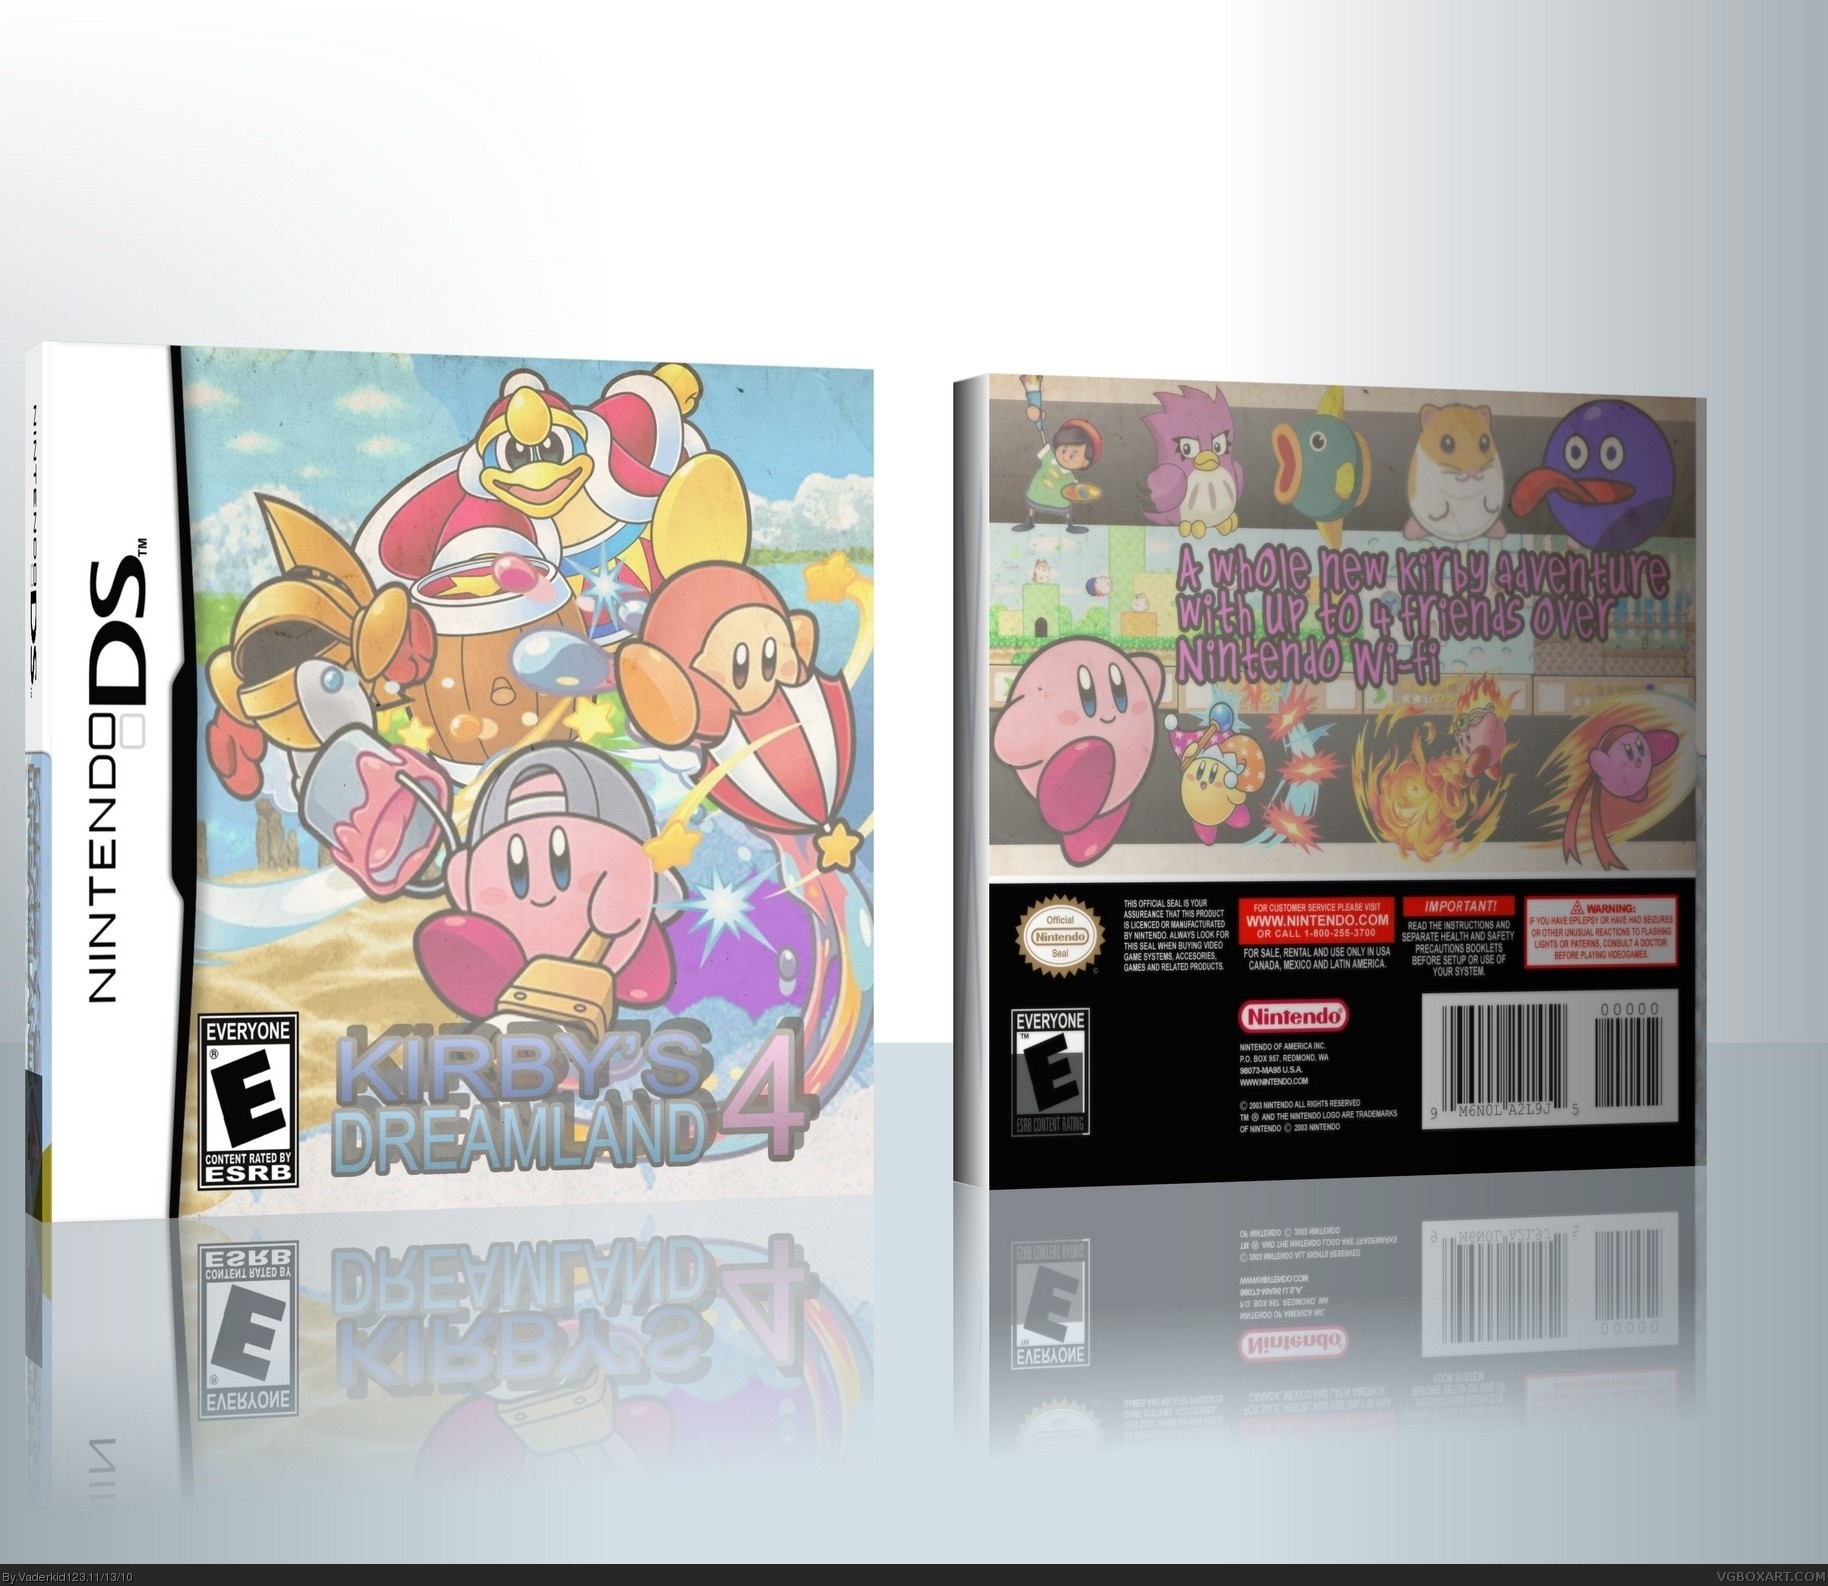 Kirby's Dreamland 4 box cover